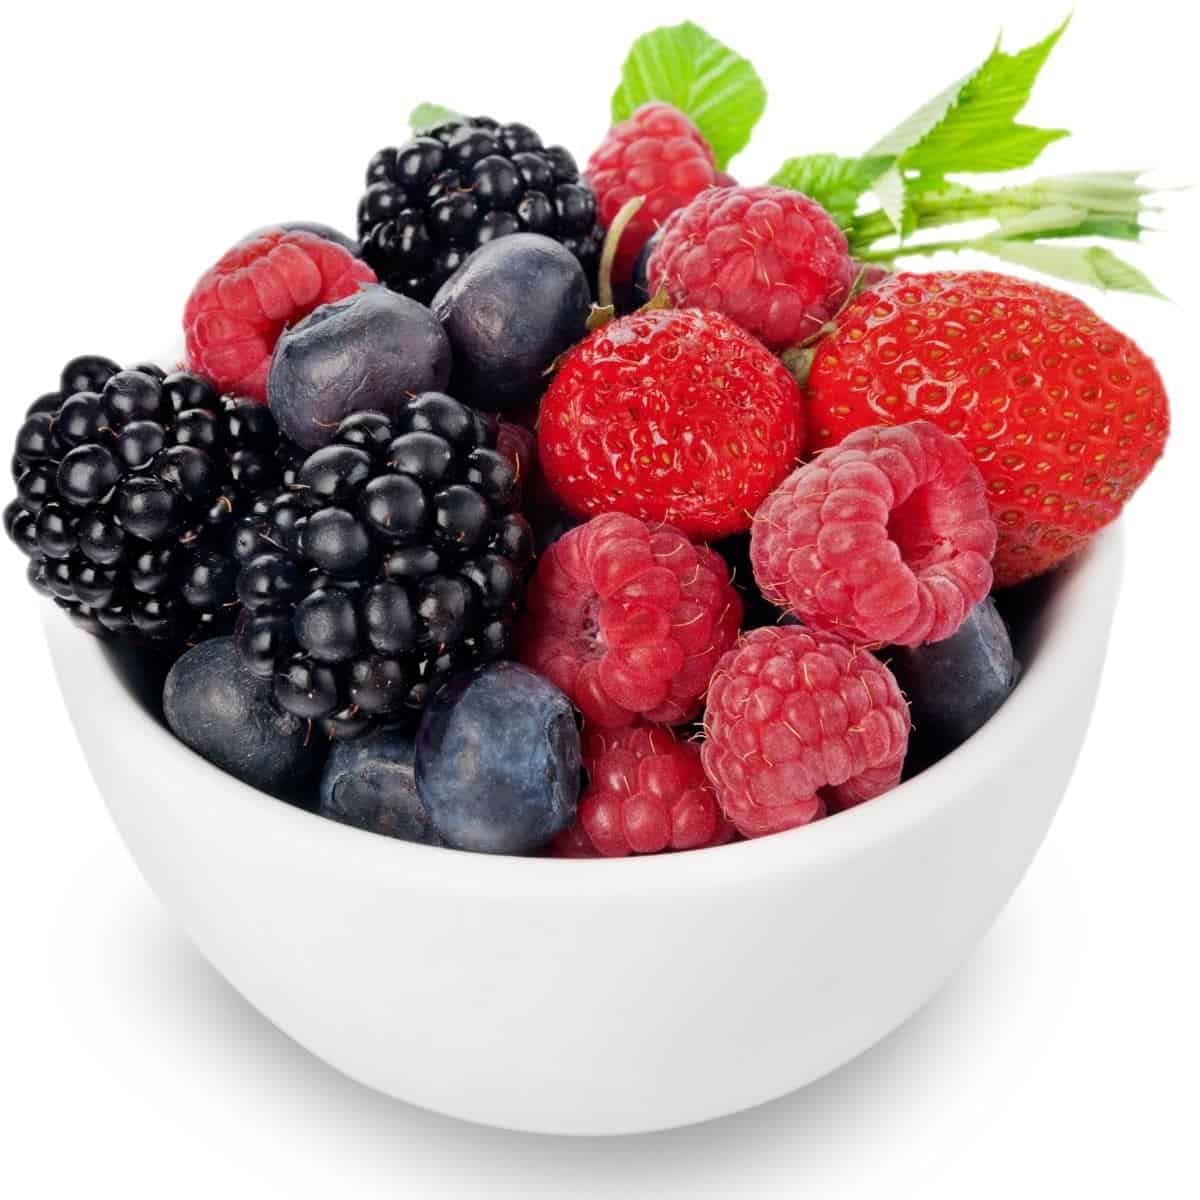 white bowl of blueberries, strawberries, raspberries, and blackberries